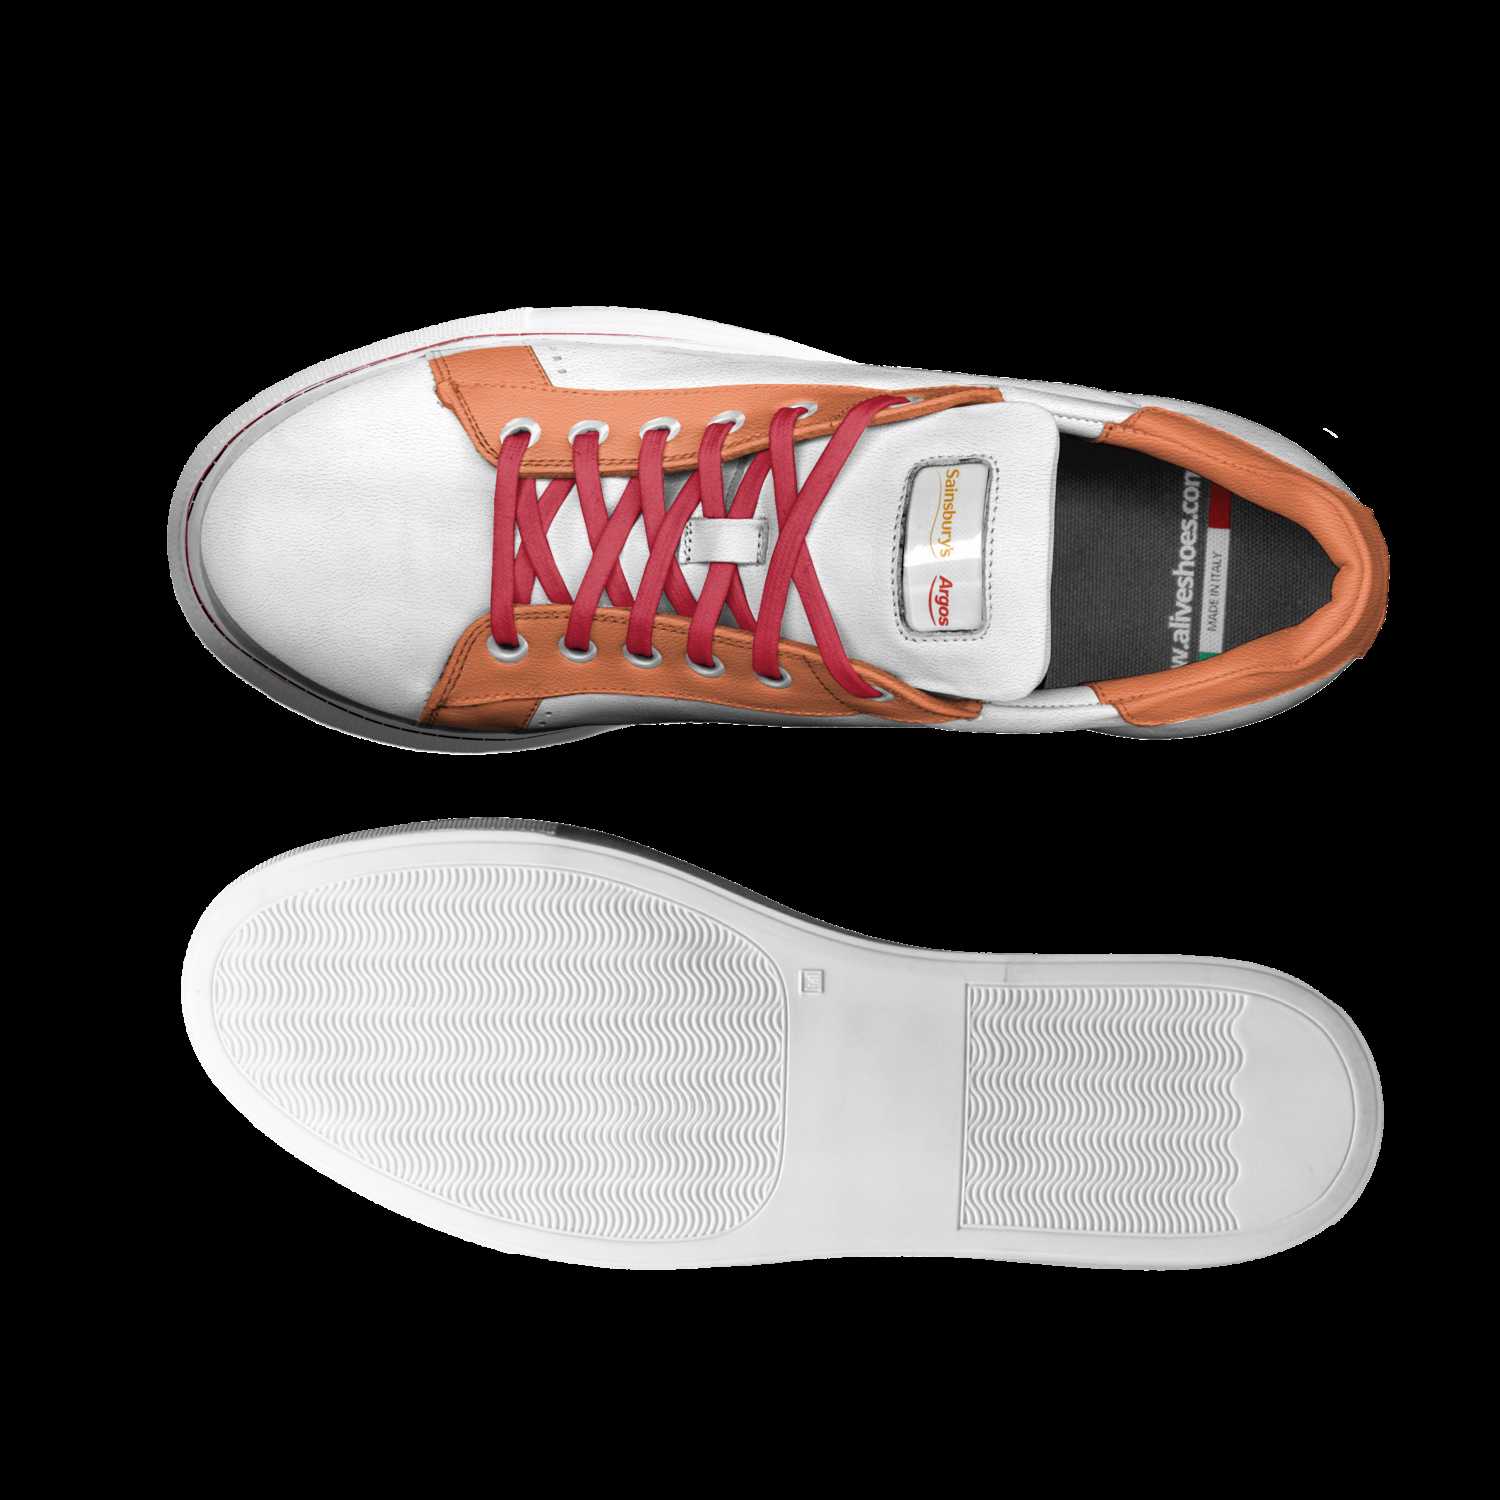 A Custom Shoe concept by Bertrand Bodson